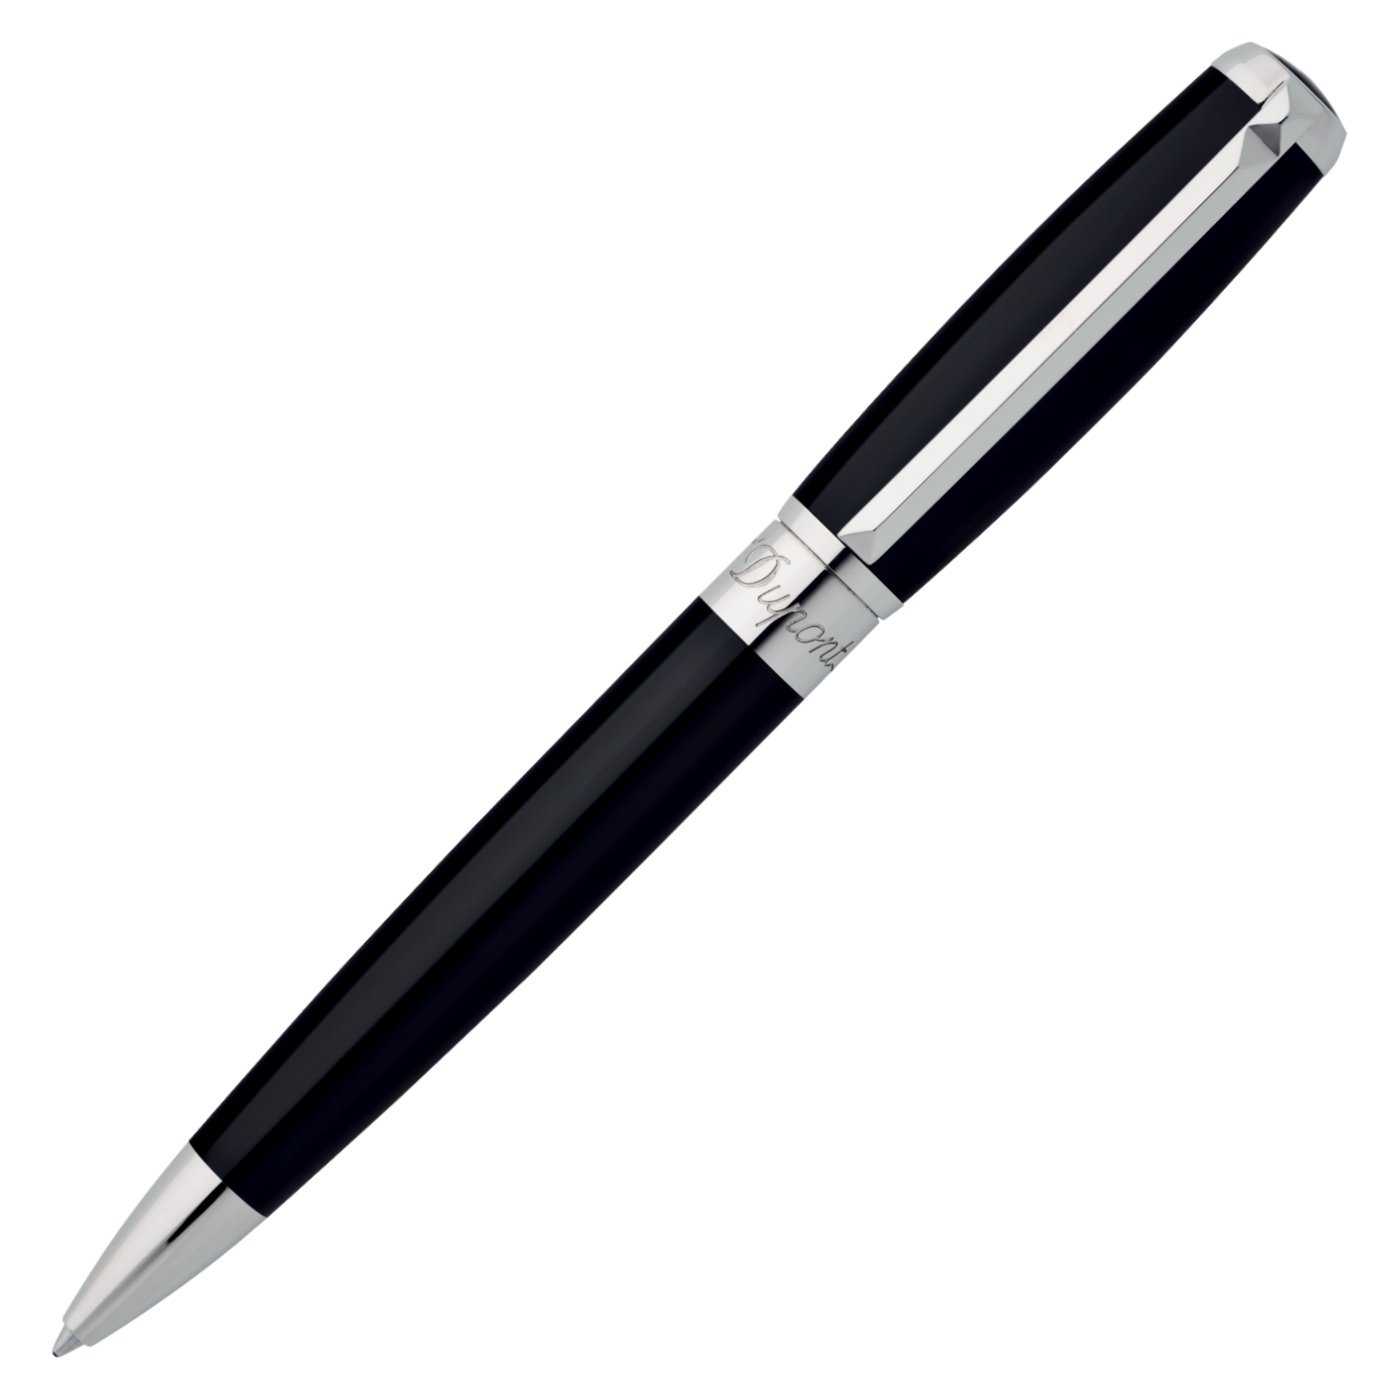 S.T. Dupont Elysee Ballpoint Pen - Black Lacquer/Palladium 415674